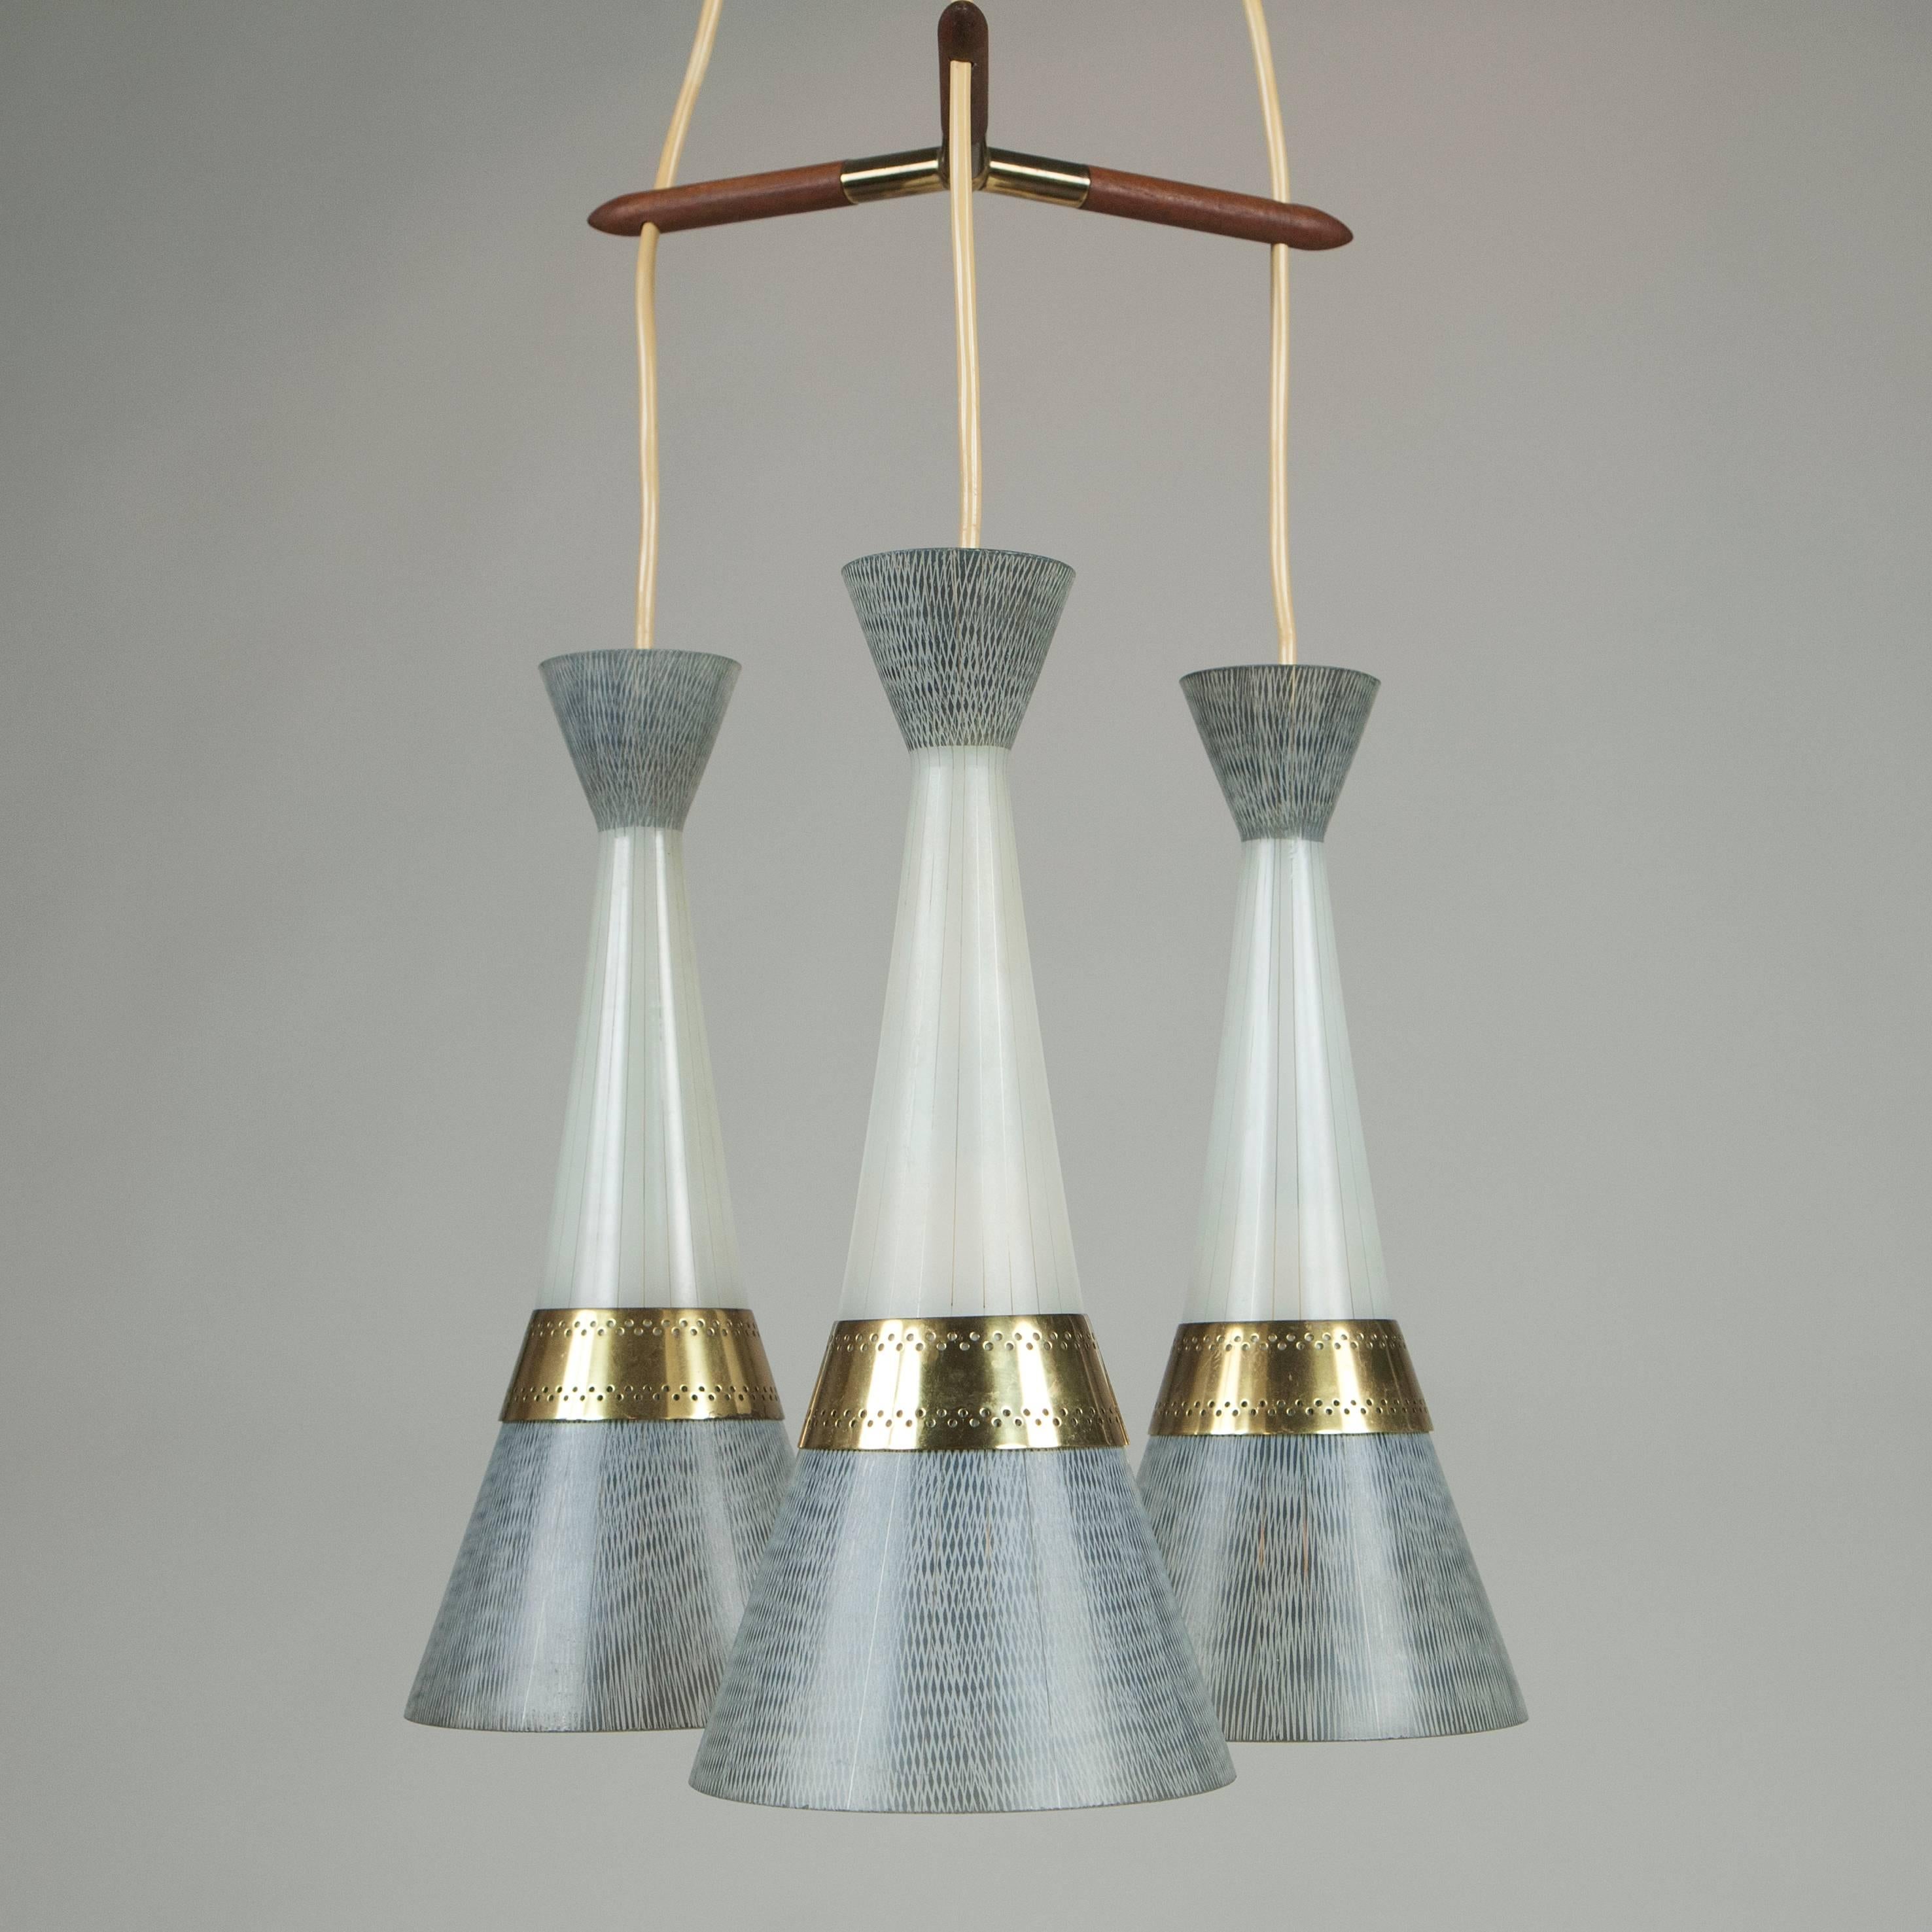 Magnificent Stilnovo style brass chandelier with fine glass shades and triangular teak element. Very rare graphic Mid-Century Modern Design from the Italian, circa 1958